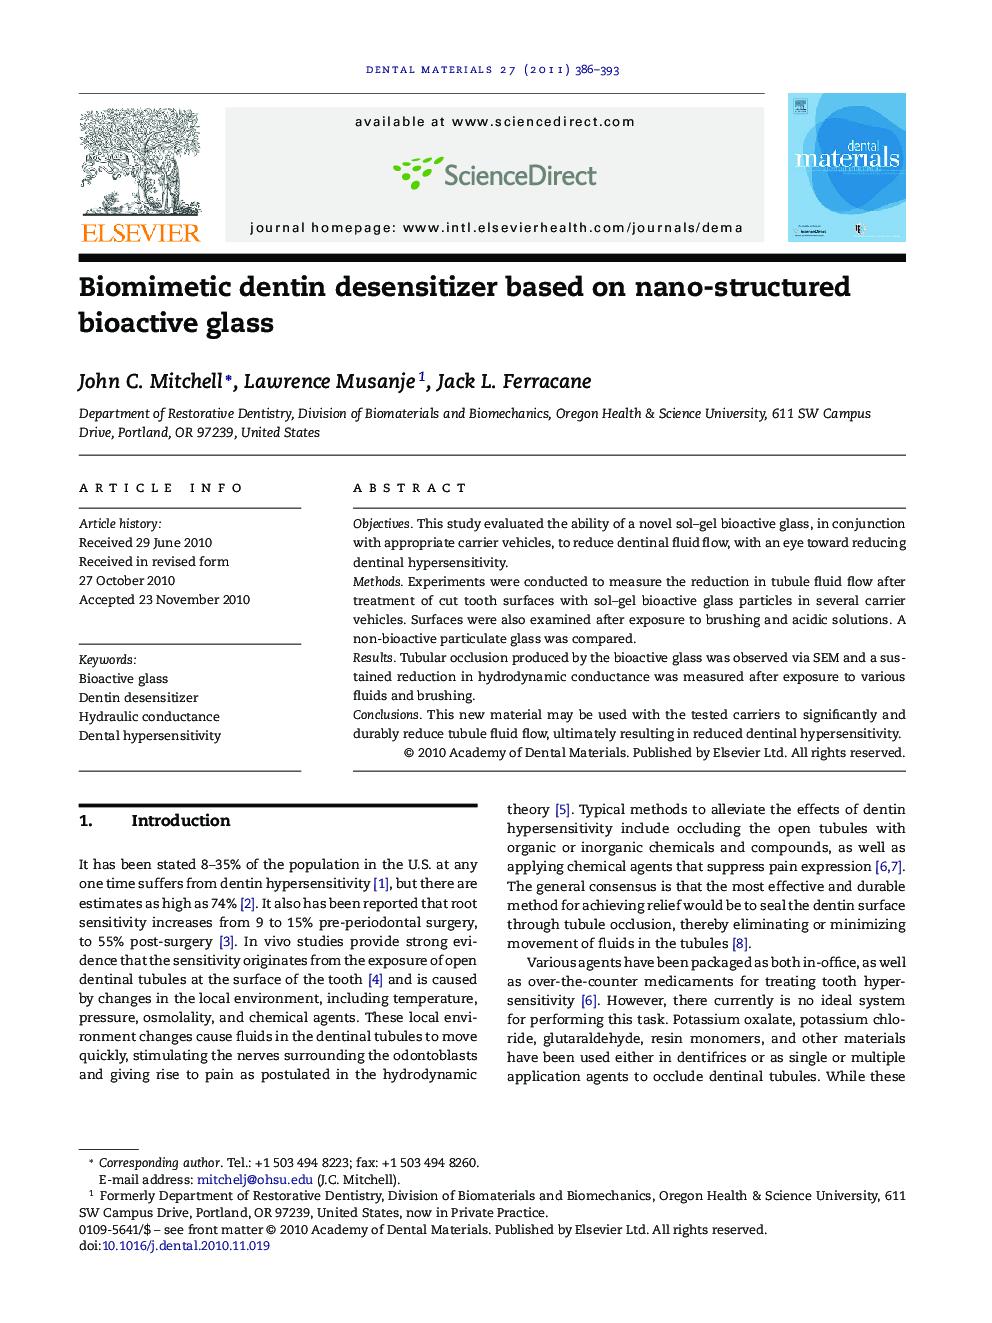 Biomimetic dentin desensitizer based on nano-structured bioactive glass